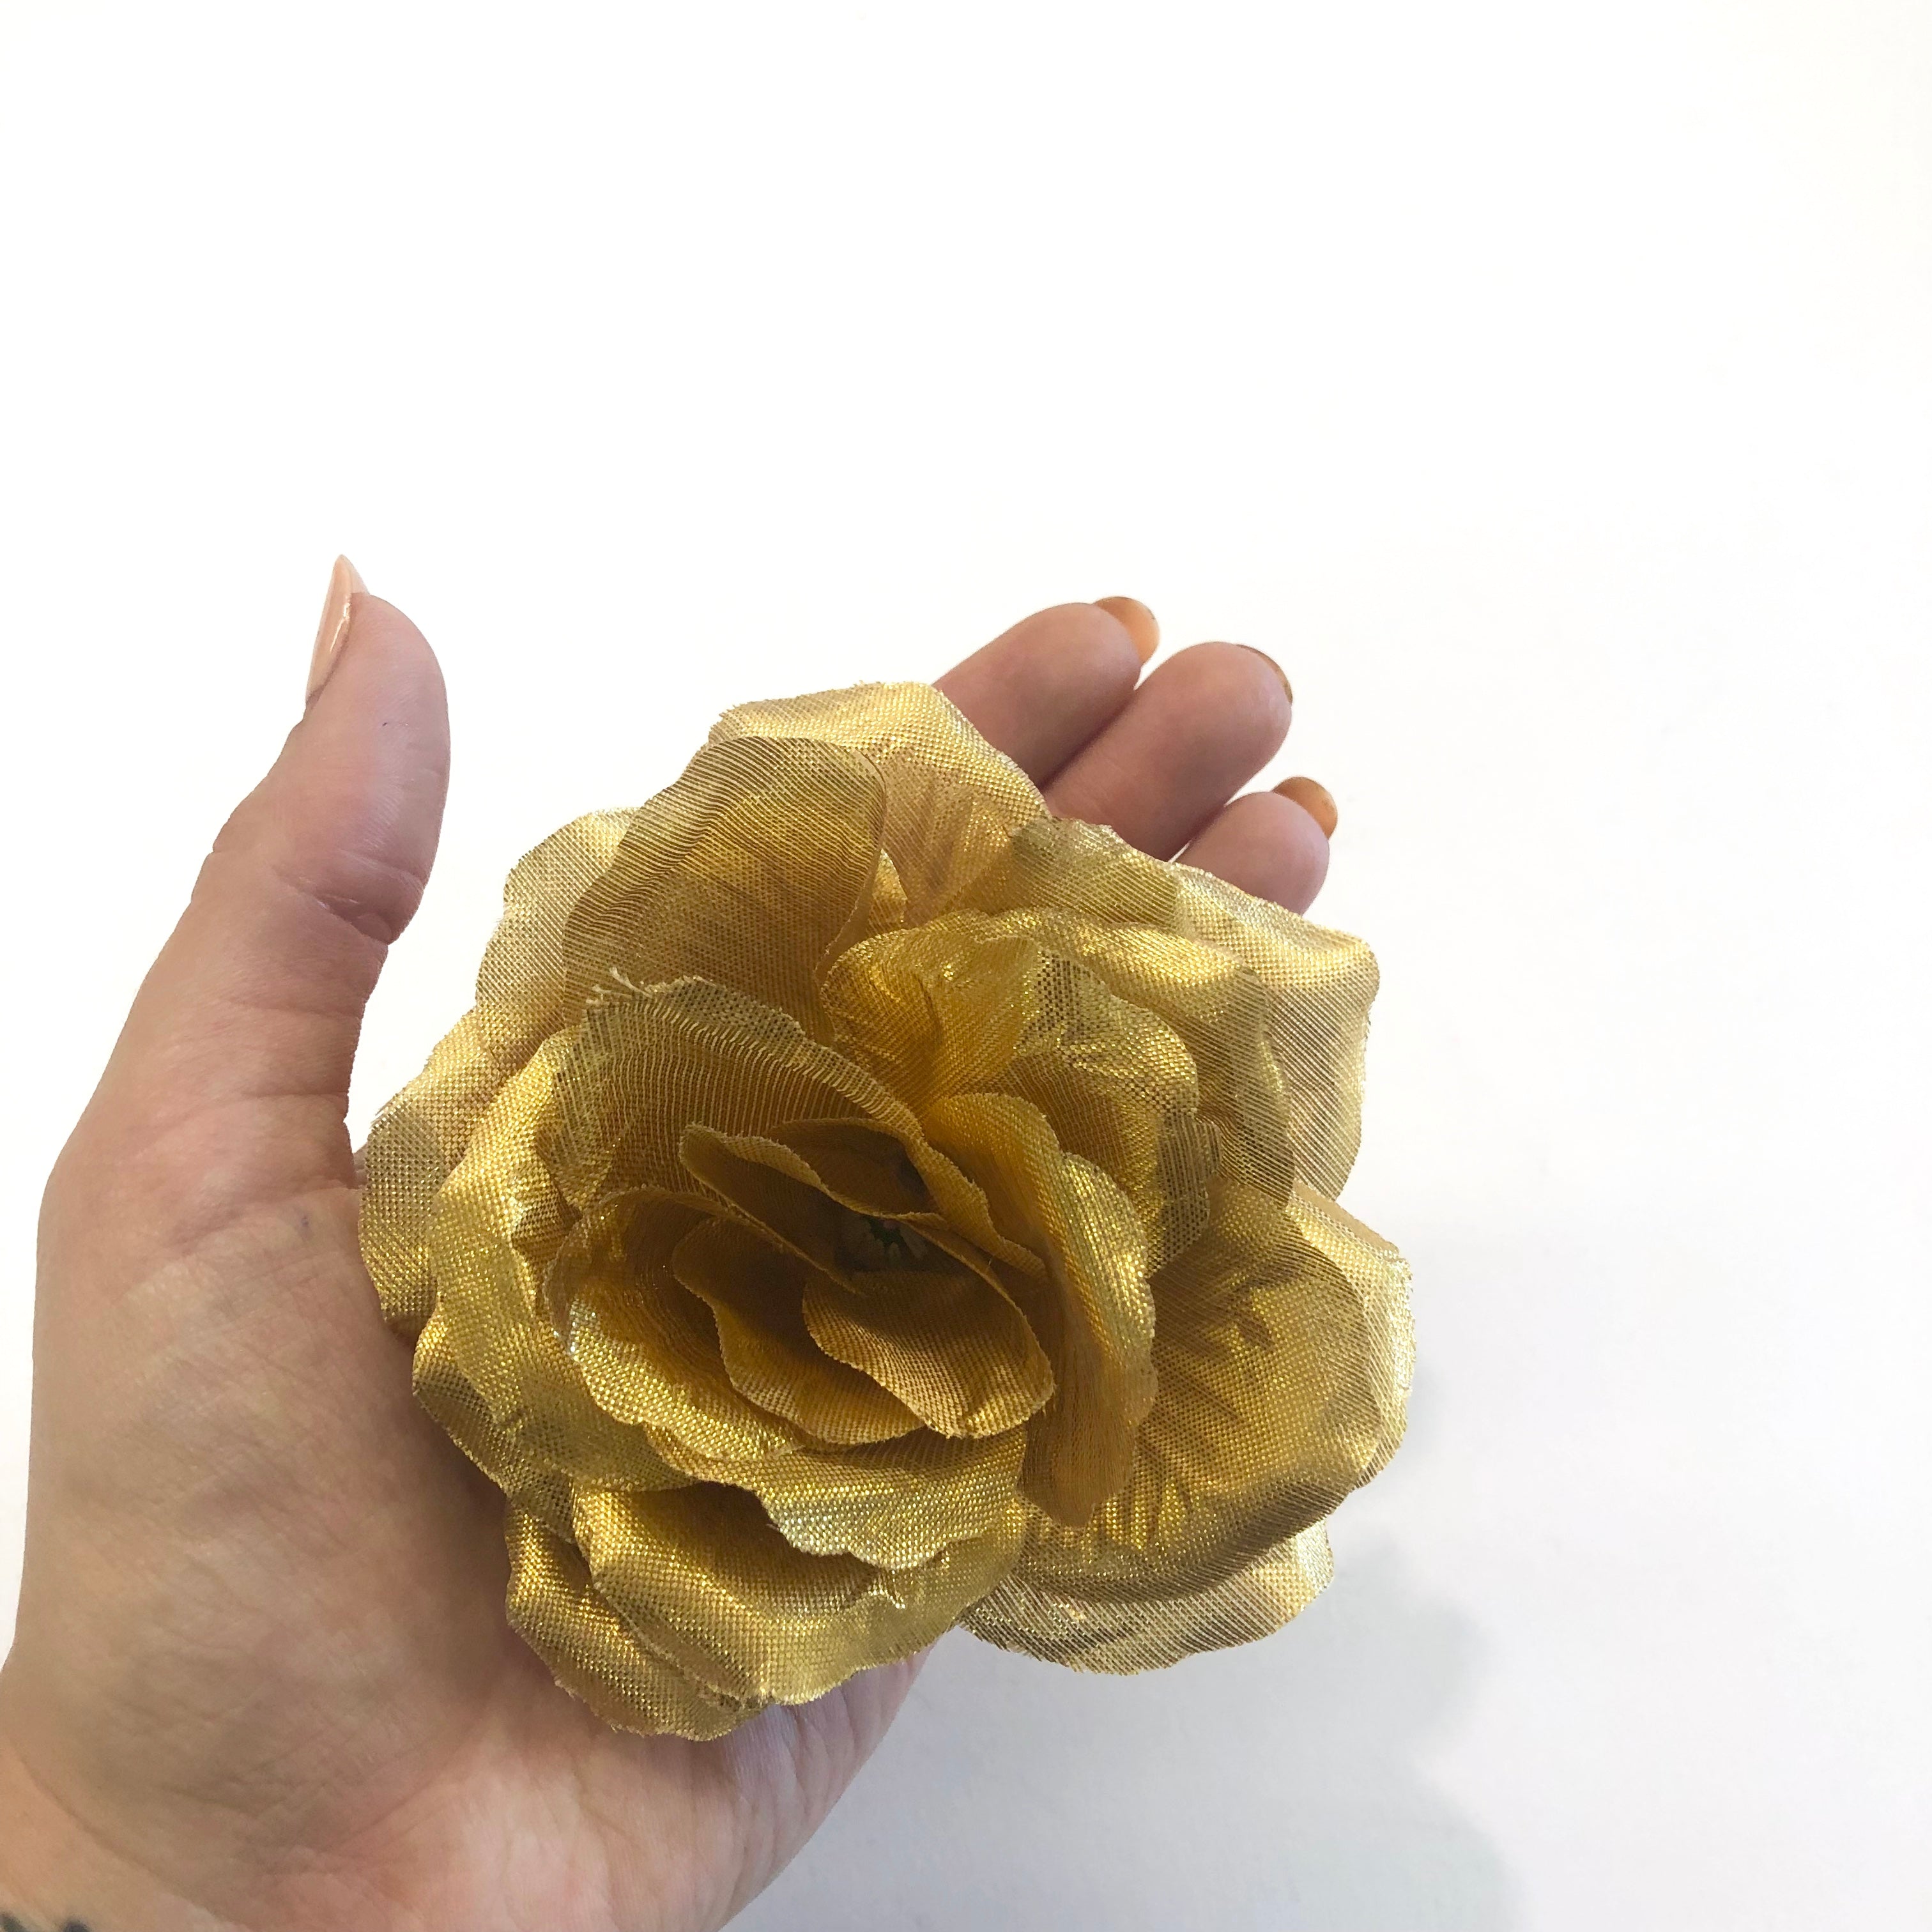 Artificial Silk Flower Head - Gold Metallic Rose Style 77 - 1pc